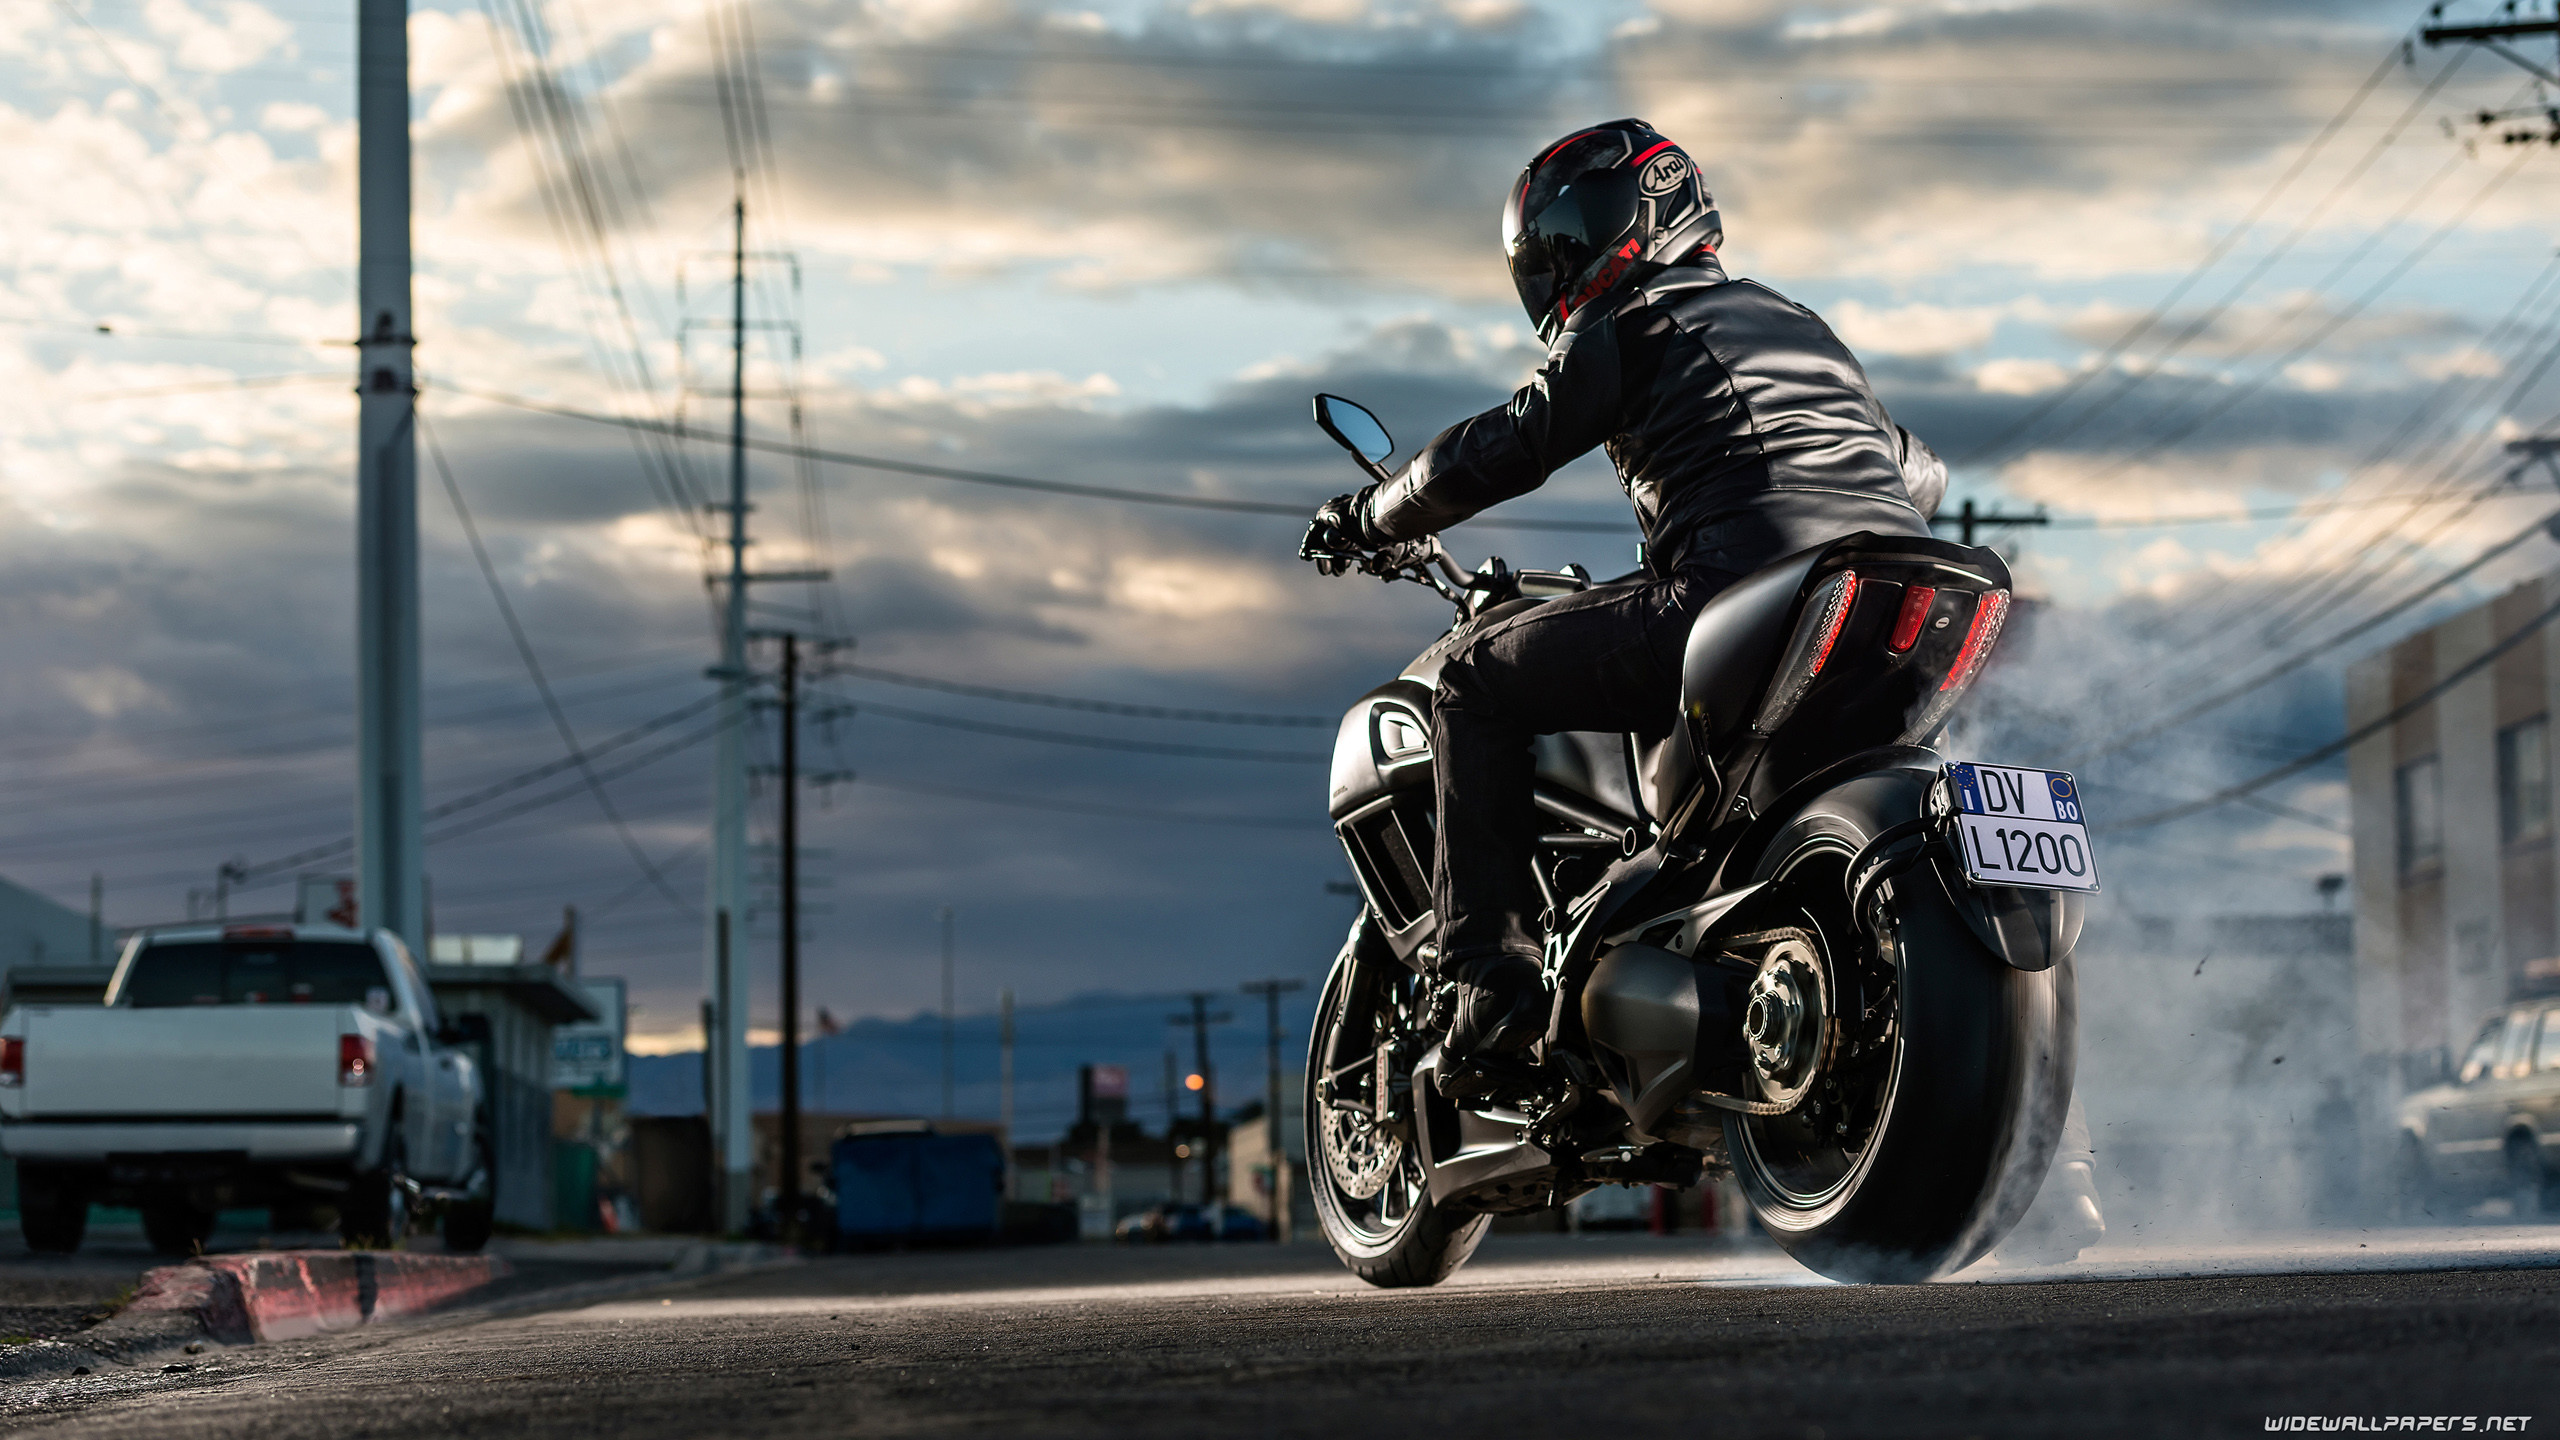 2560x1440 Ducati Diavel motorcycle wallpapers 4K Ultra HD Ducati Diavel motorcycle   2560x1600 3840x2160